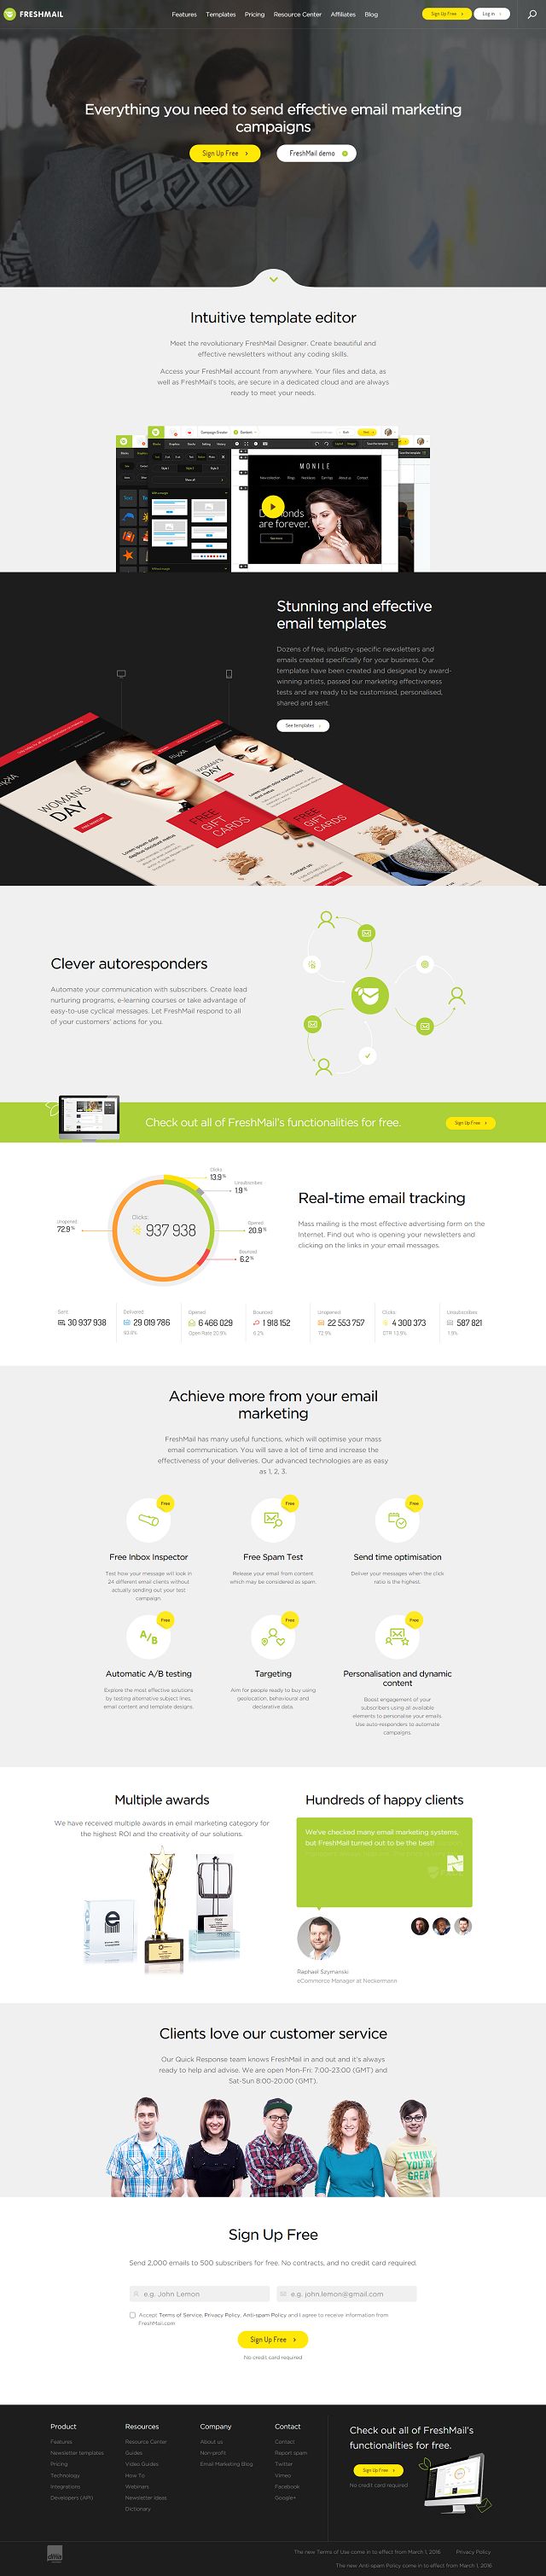 FreshMail Email Marketing screenshot